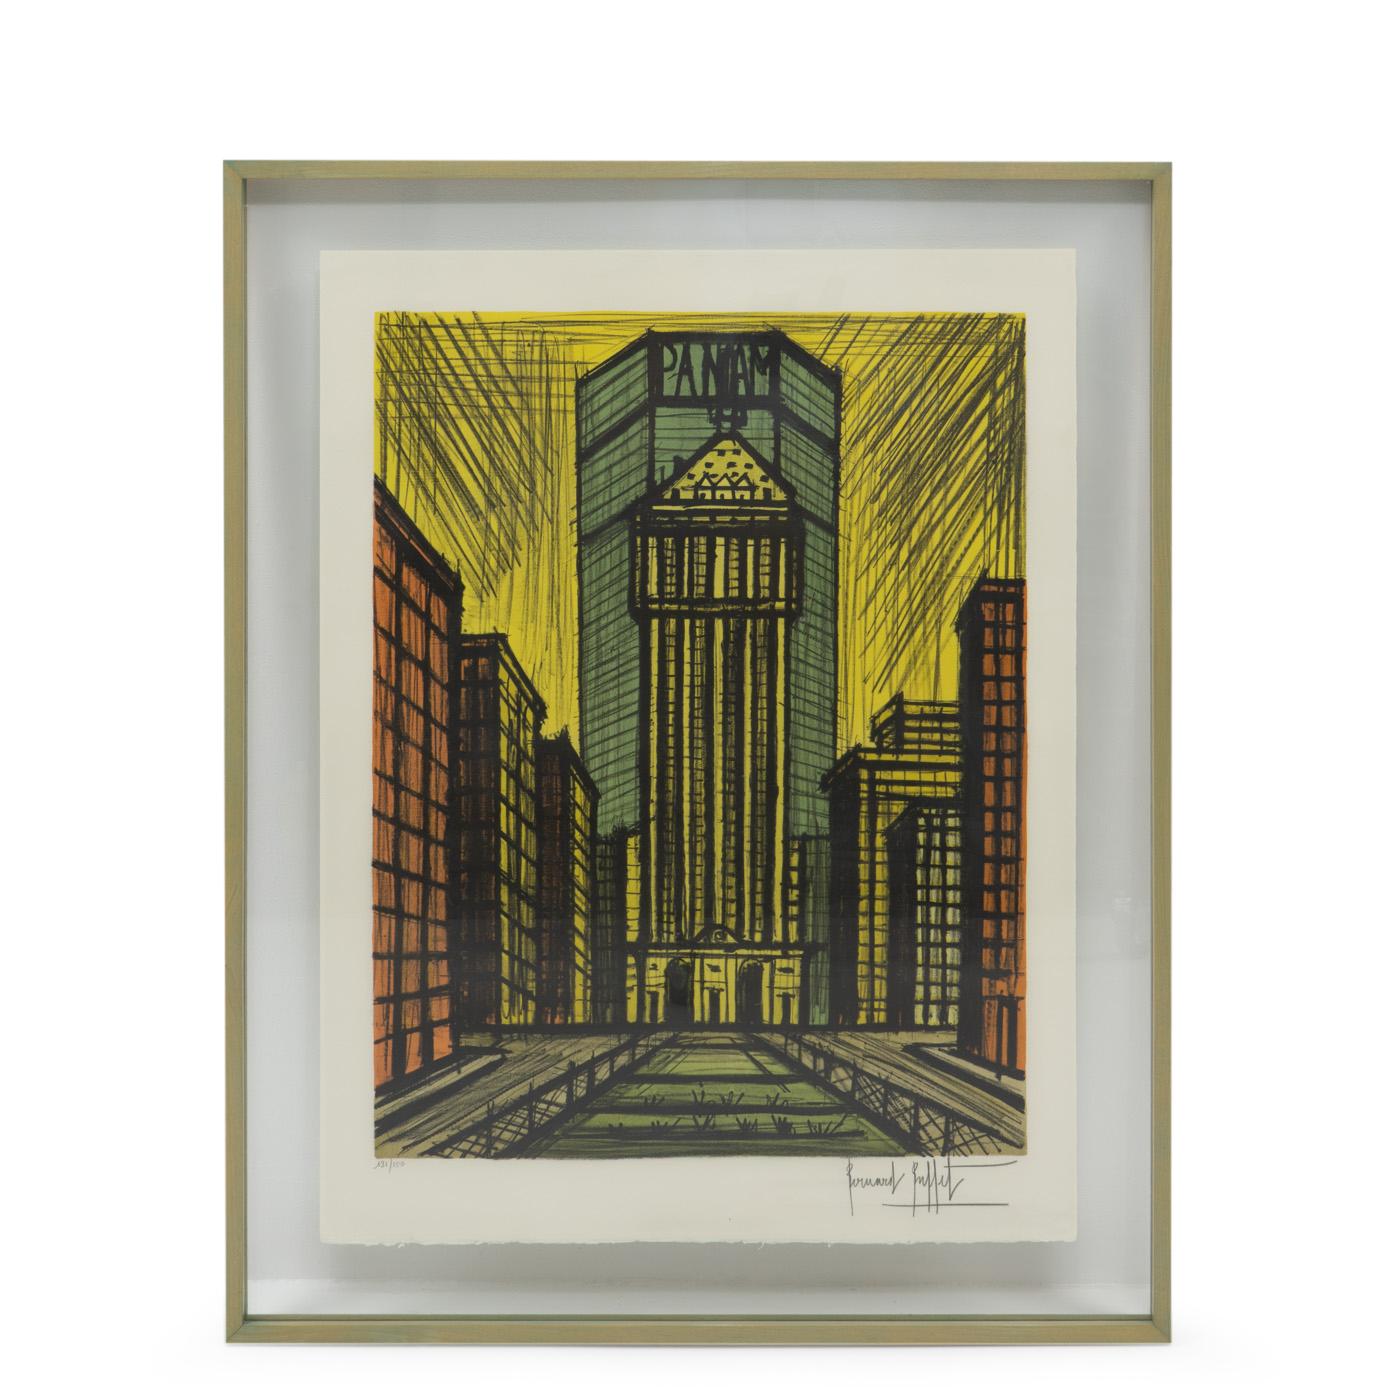 Mid-Century Modern Lithograph by Bernard Buffet “Panam” New York Landmark Building, Signed, 1980s For Sale